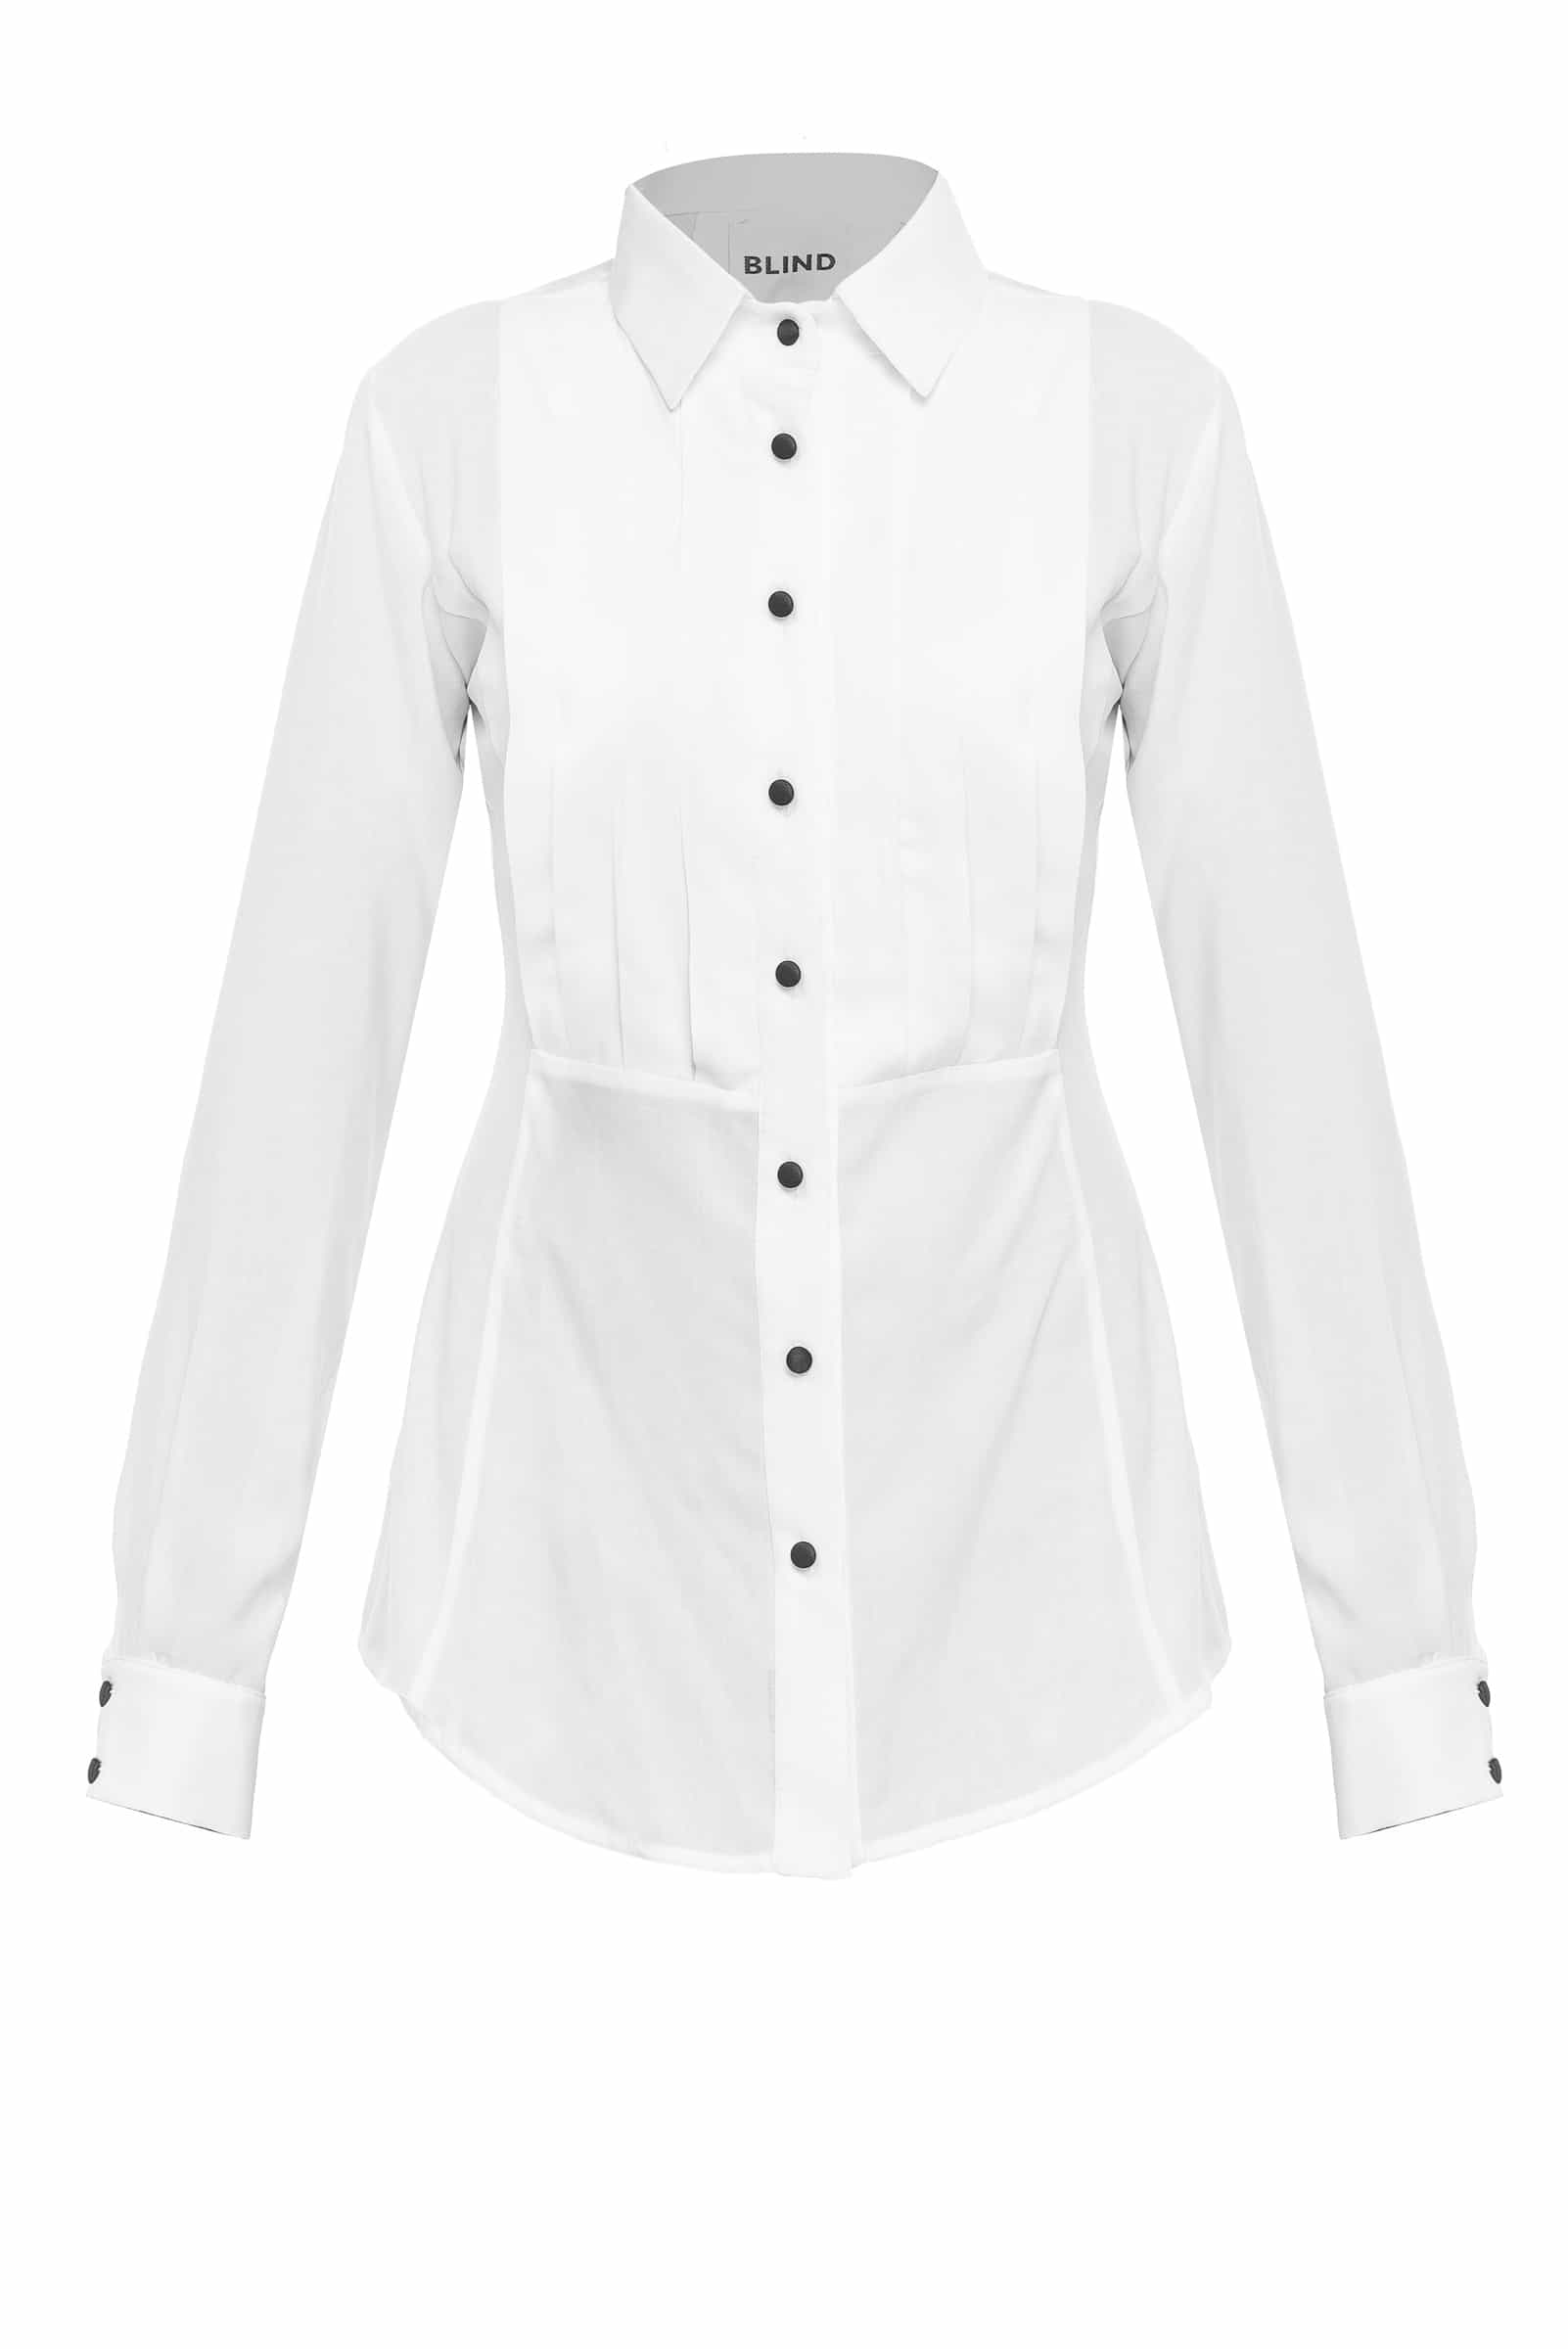 White dress shirt